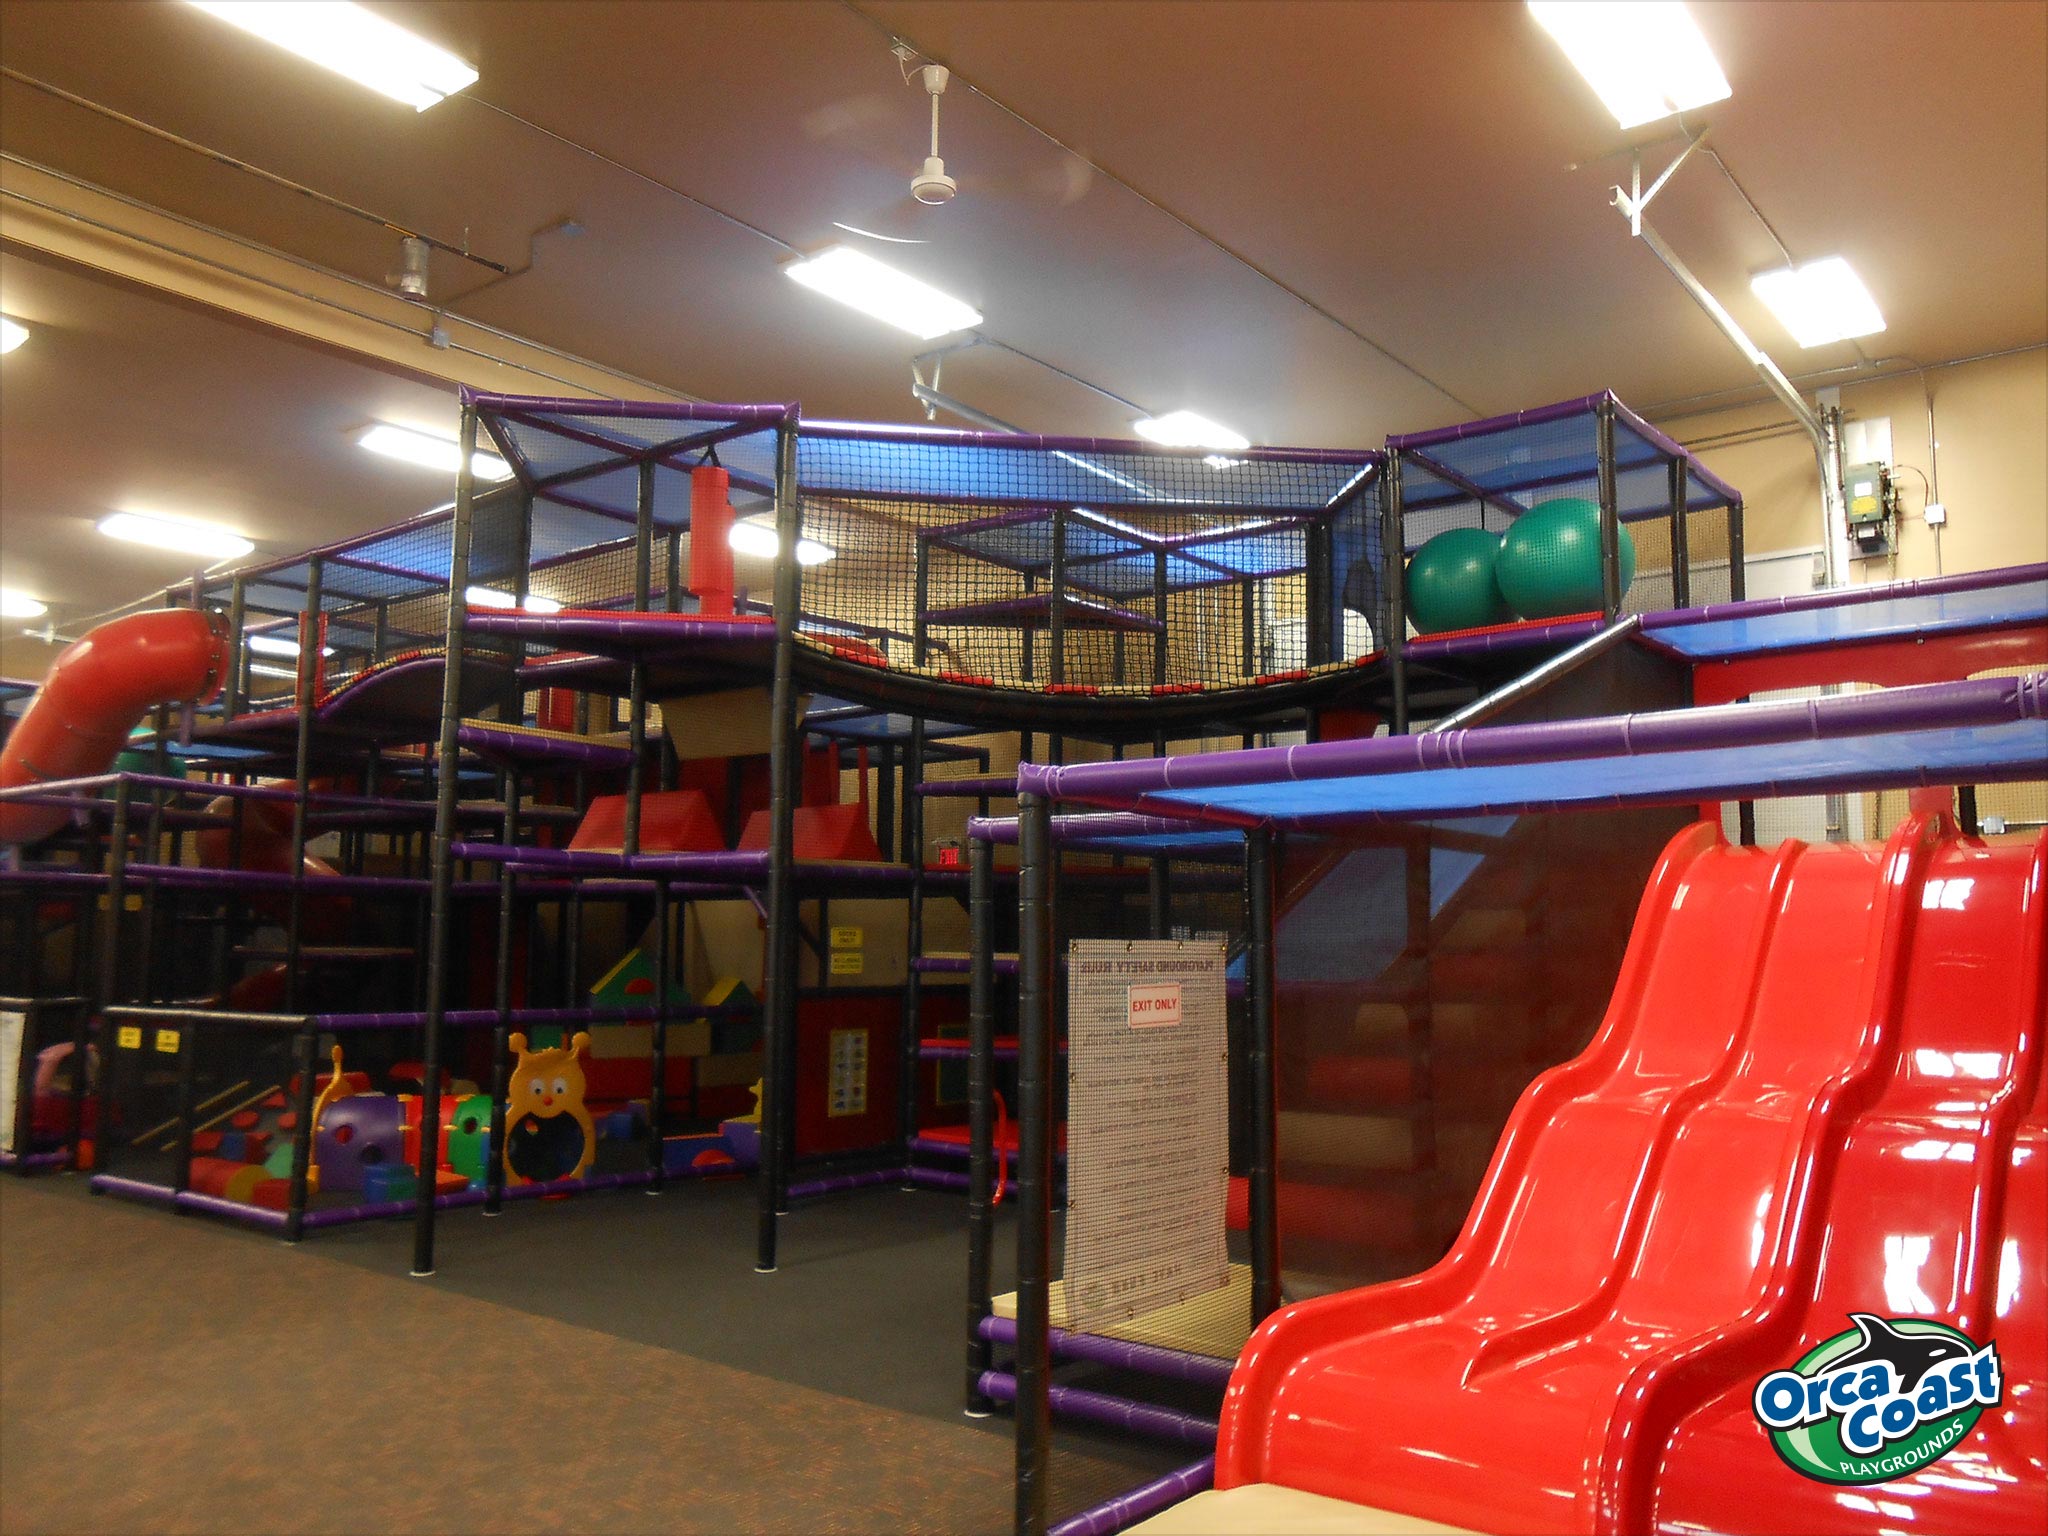 Orca Coast Playground Ltd. designed and built the indoor playground at CJ's Climb and Play in Warman, Saskatchewan